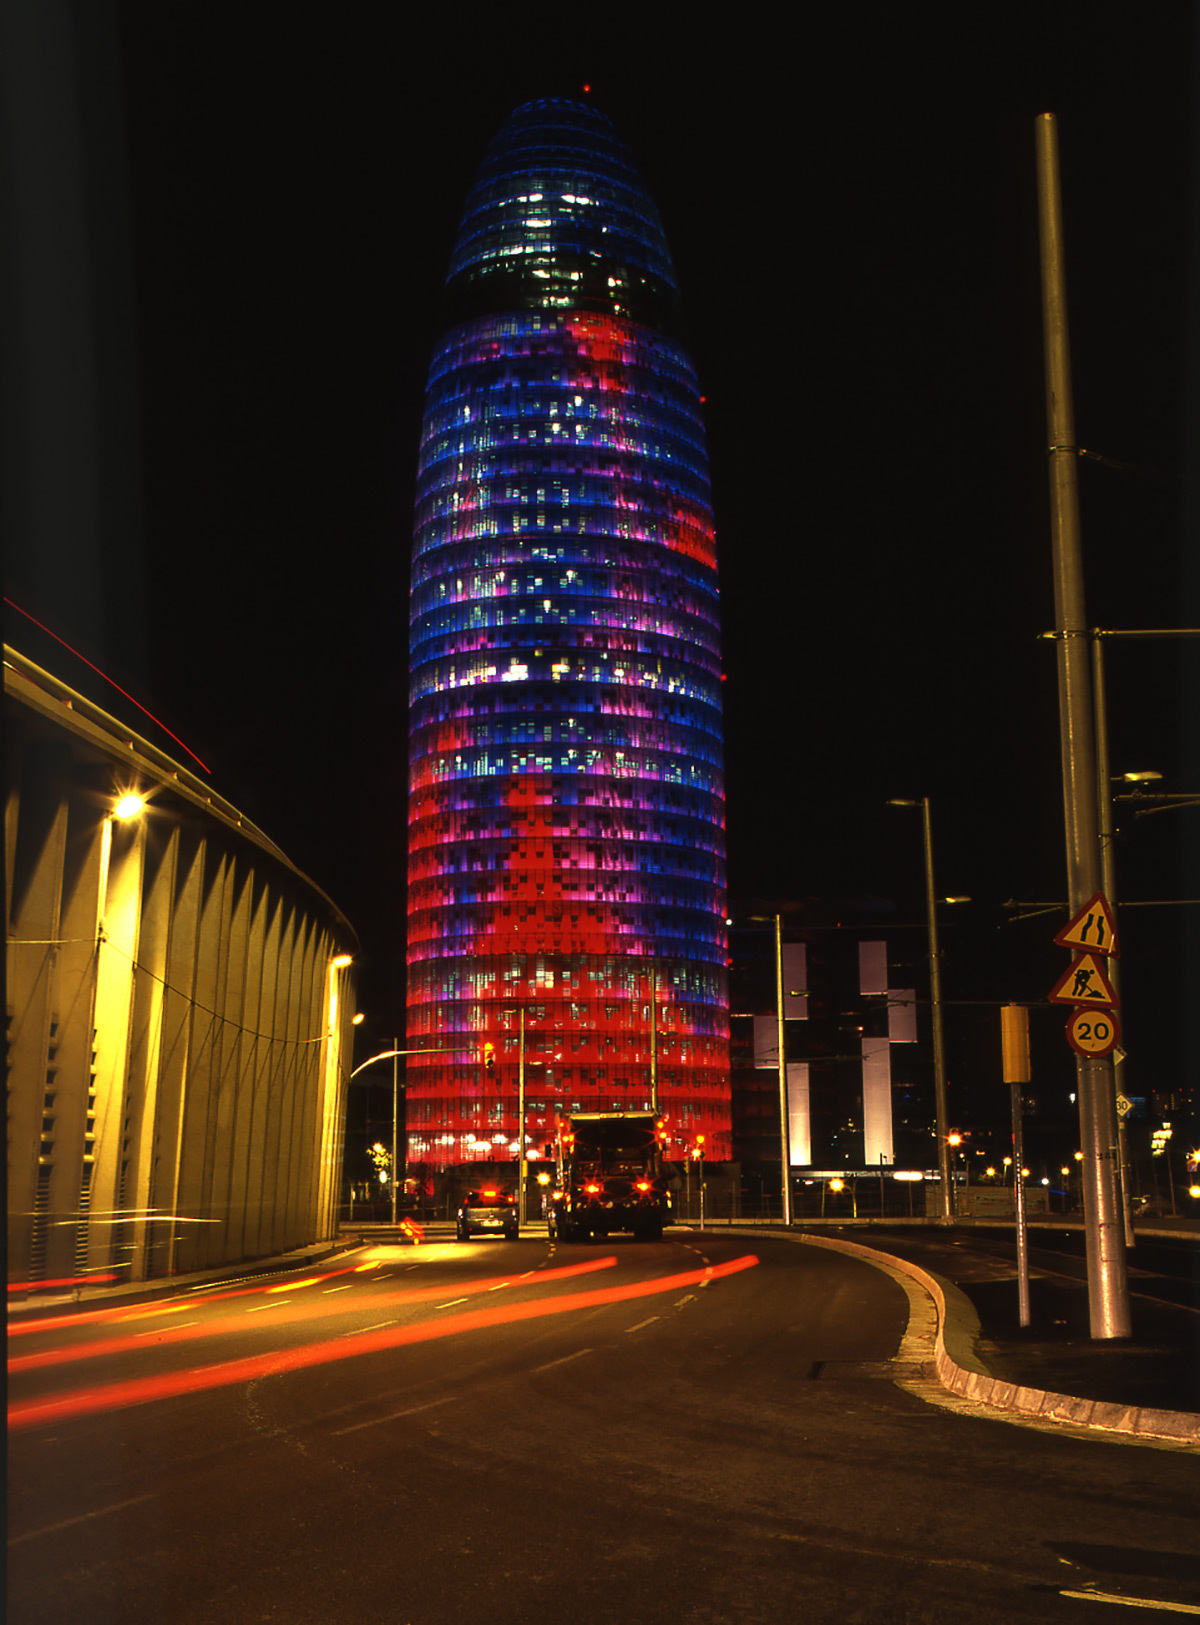 "Diffraction" - Torre Agbar, Barcelone, Espagne - Architecte : Jean Nouvel